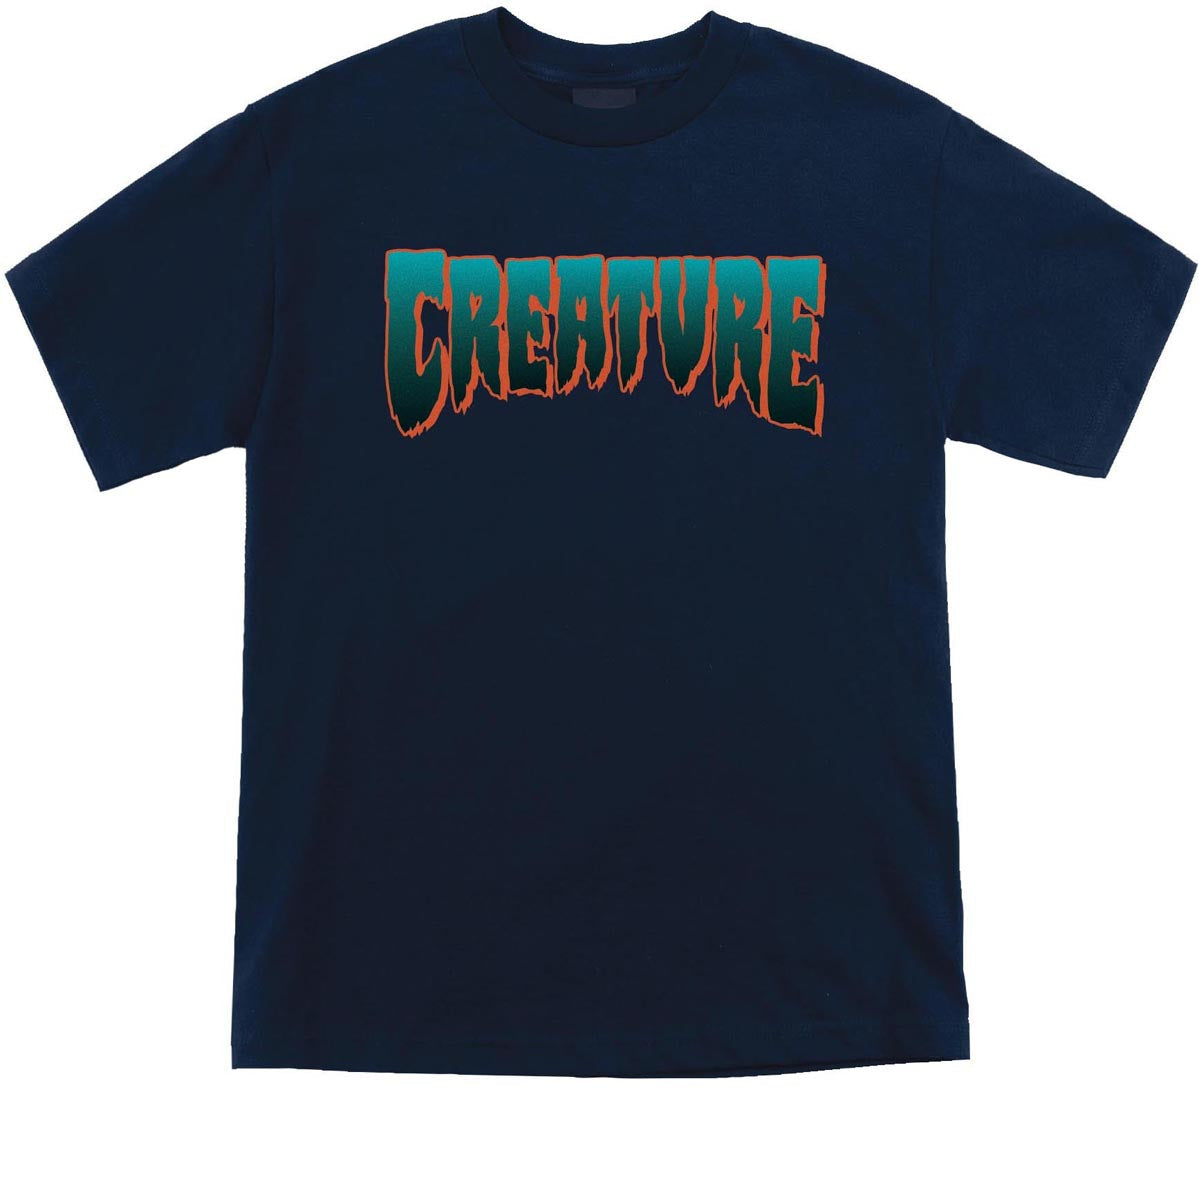 Creature Logo T-Shirt - Navy/Teal image 1